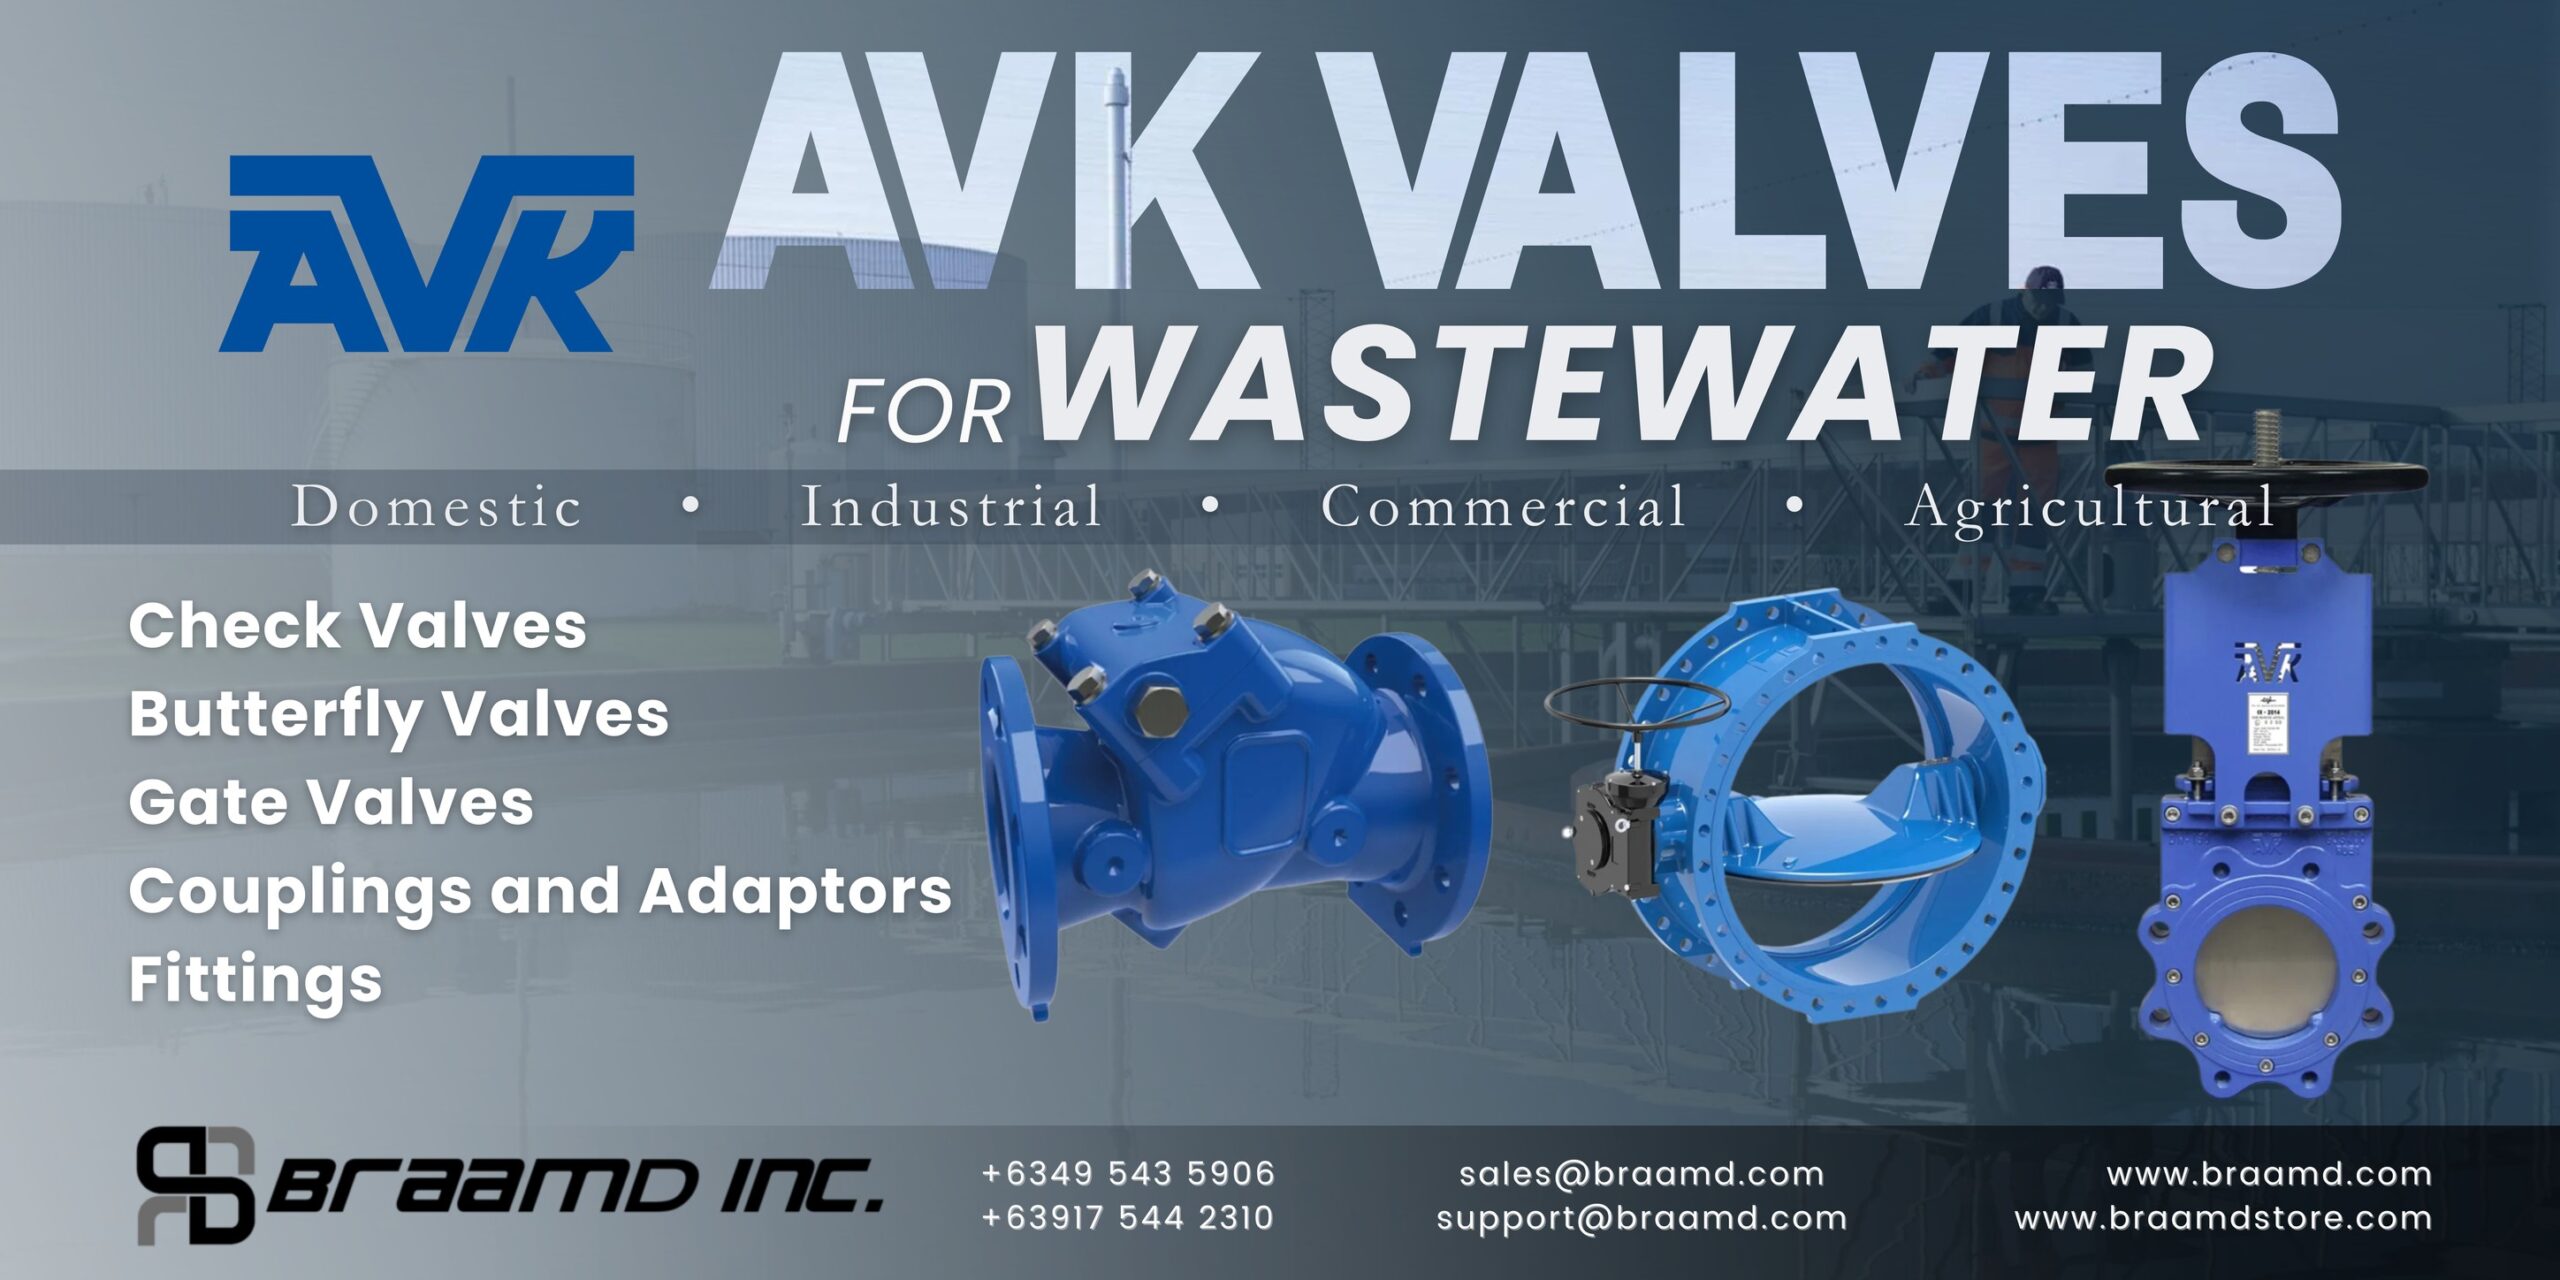 AVK Valves For Wastewater